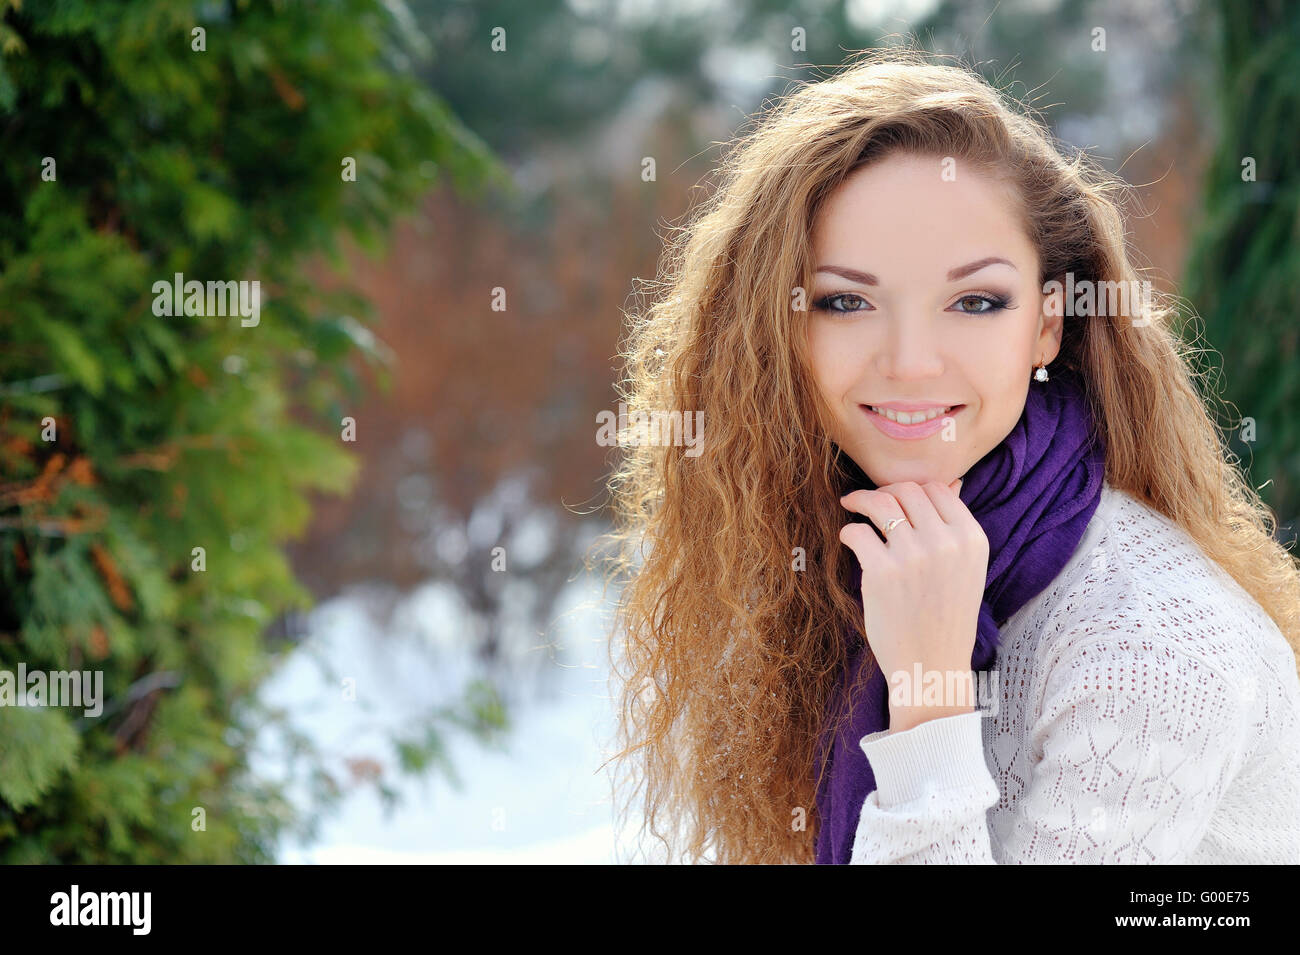 Young beautiful woman wearing winter clothing Stock Photo